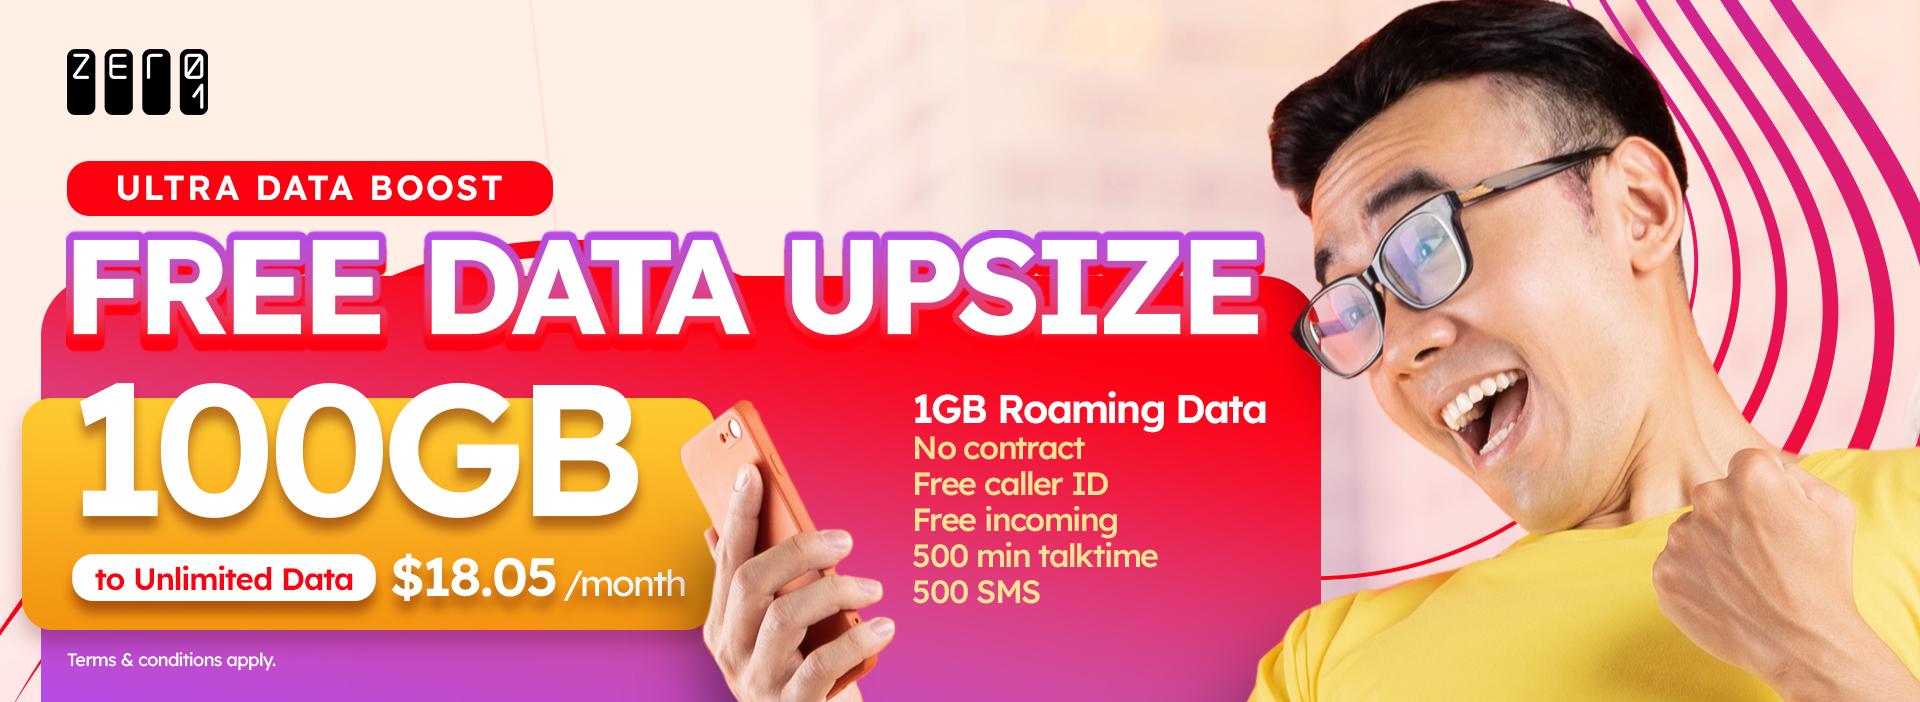 Ultra Data Boost - Zero1 50u Mobile Plan - 100GB - Banner